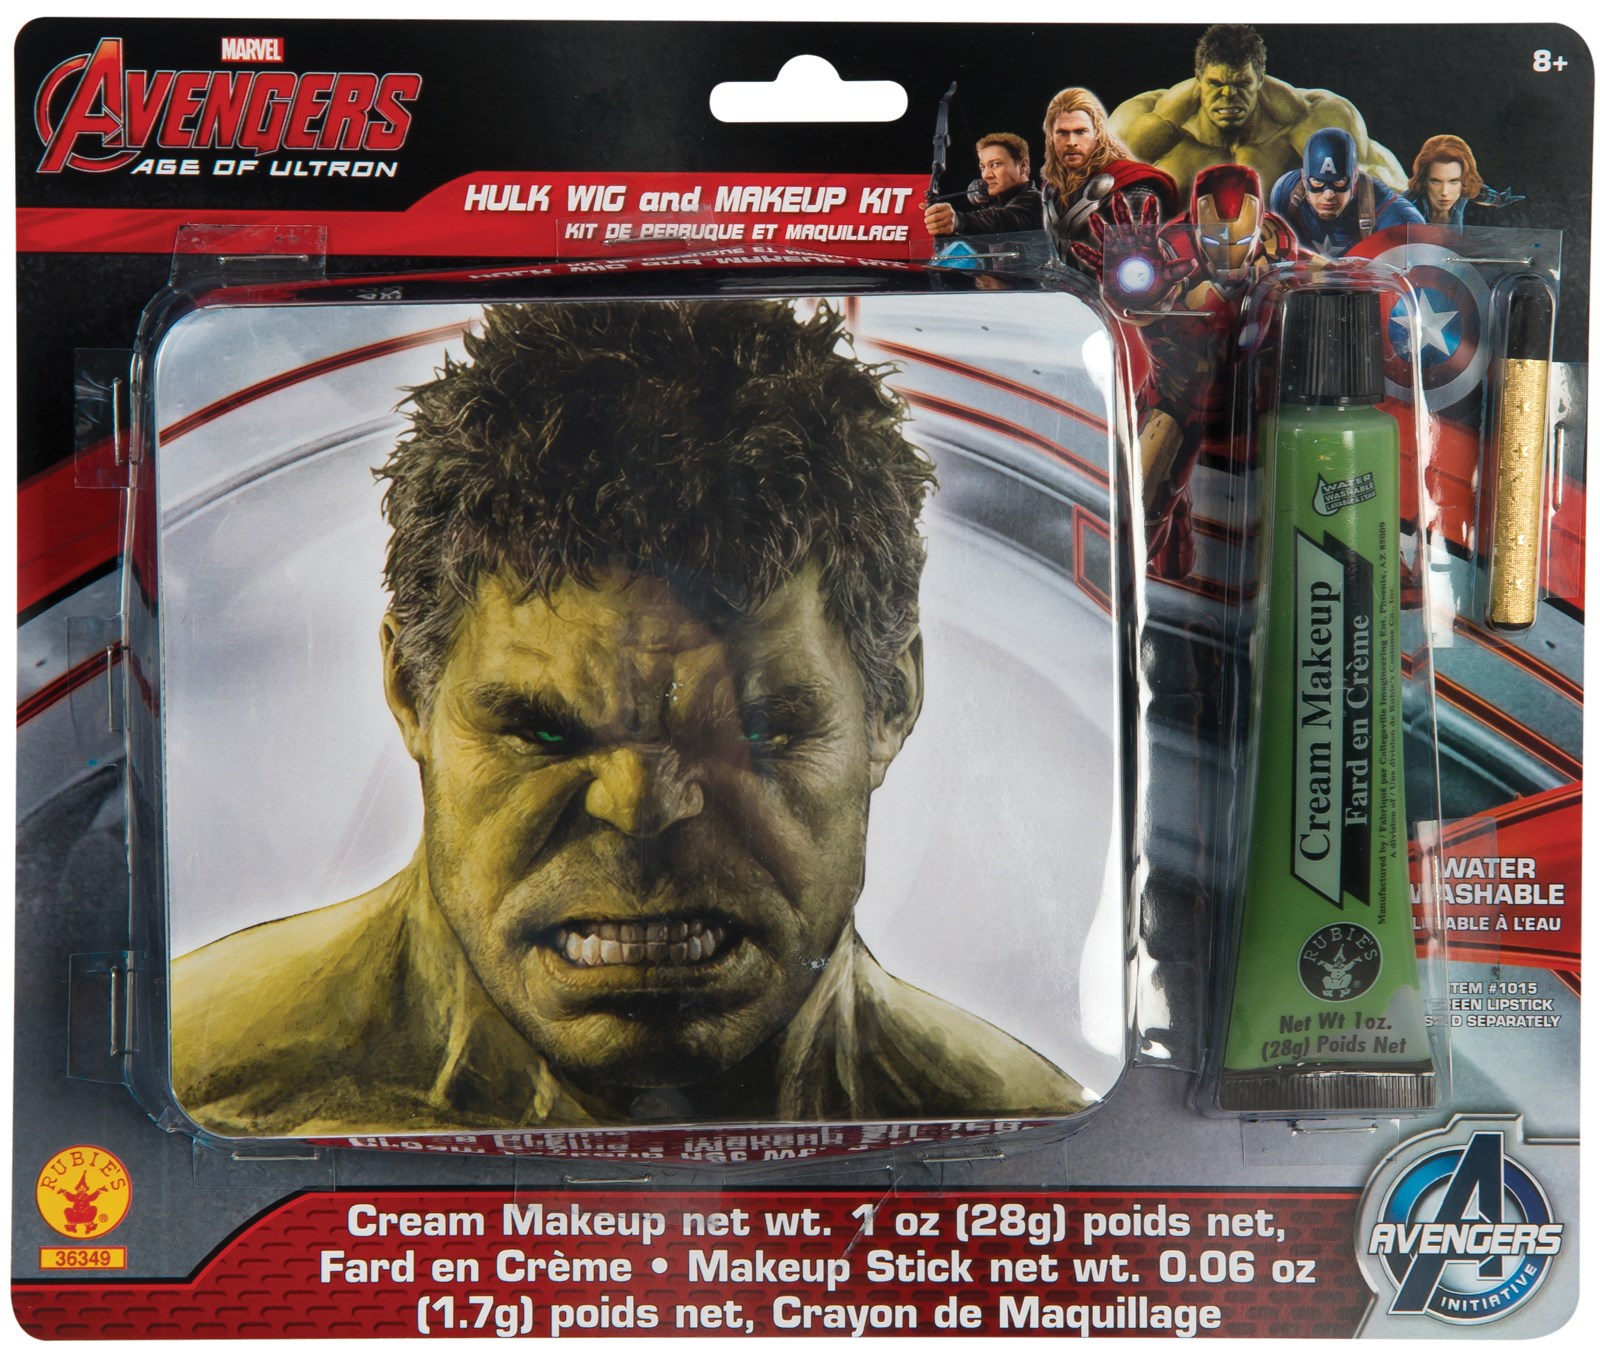 Avengers 2 - Age of Ultron: The Hulk Costume Makeup Kit